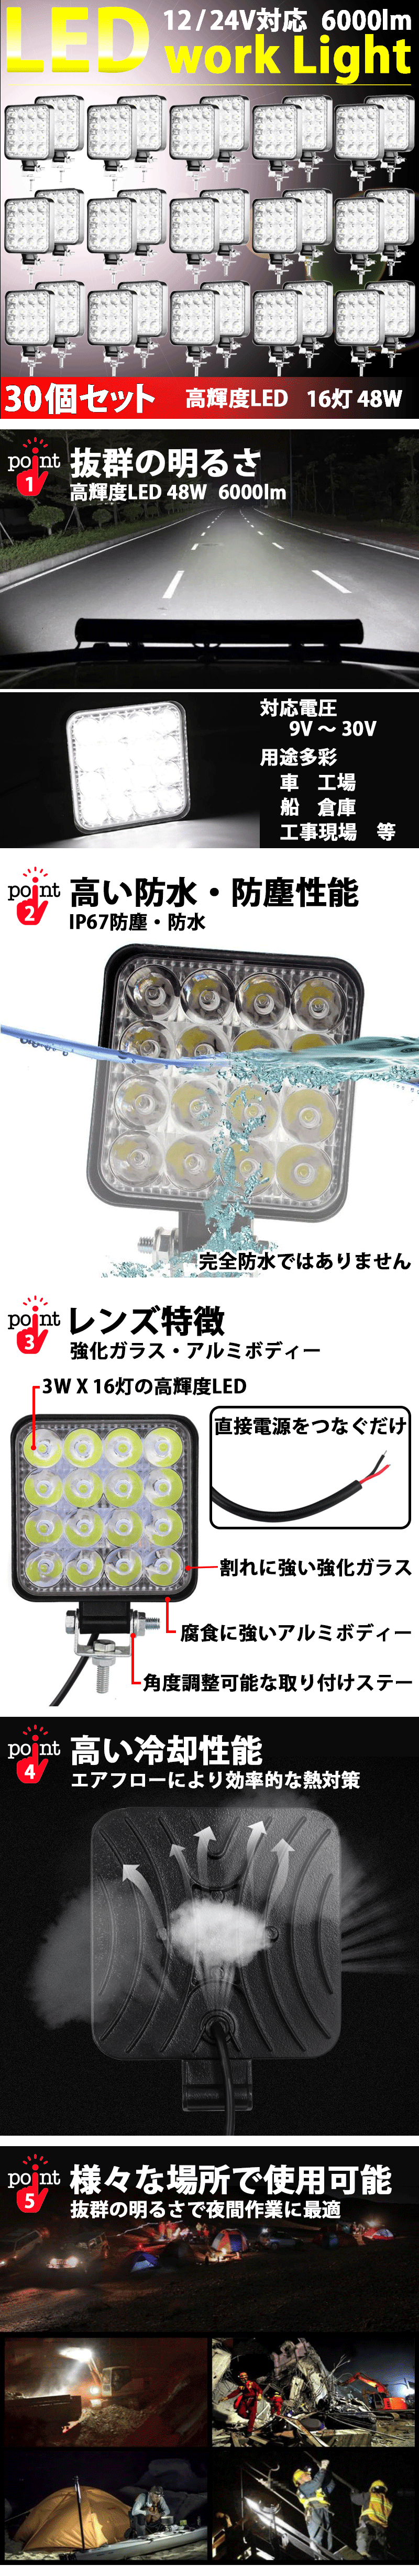 LED作業灯30個セット_1